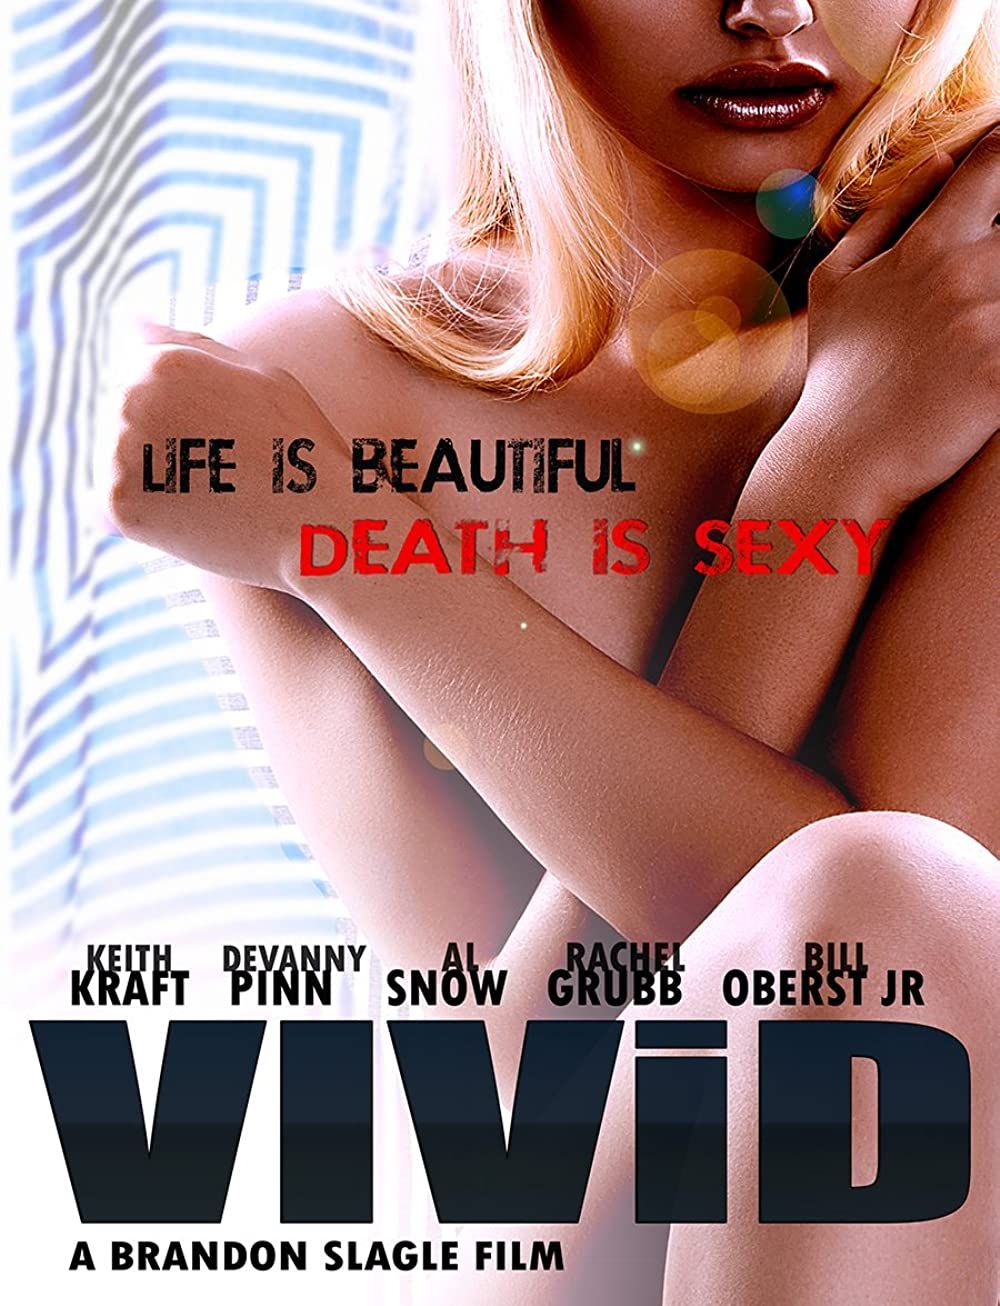 [18+] VIViD (2011) UNCUT Hindi Dubbed HDRip download full movie